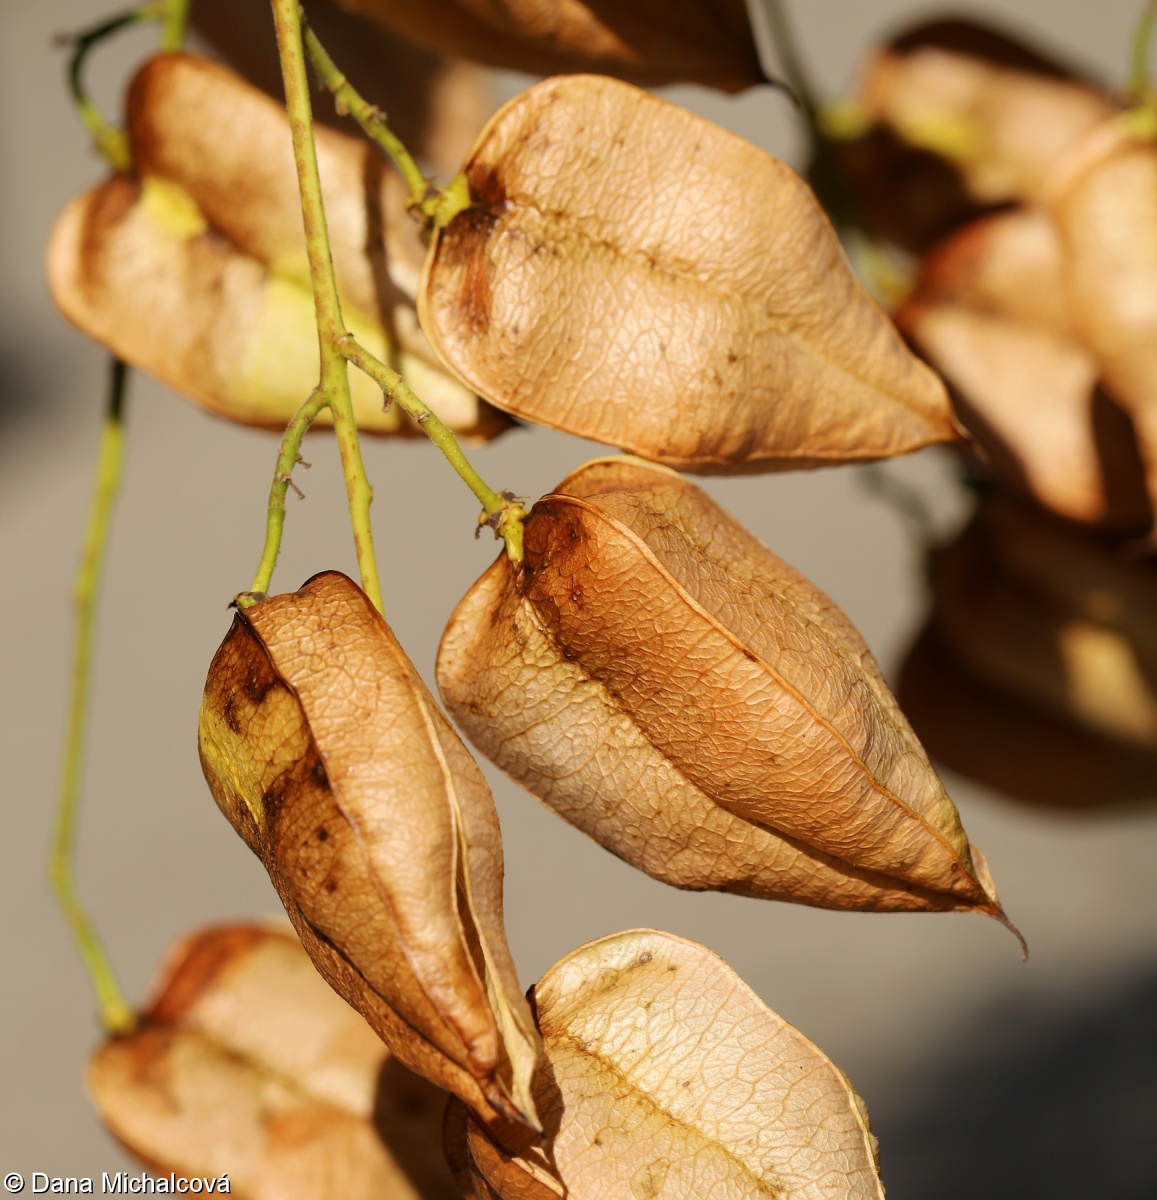 Koelreuteria paniculata – svitel latnatý